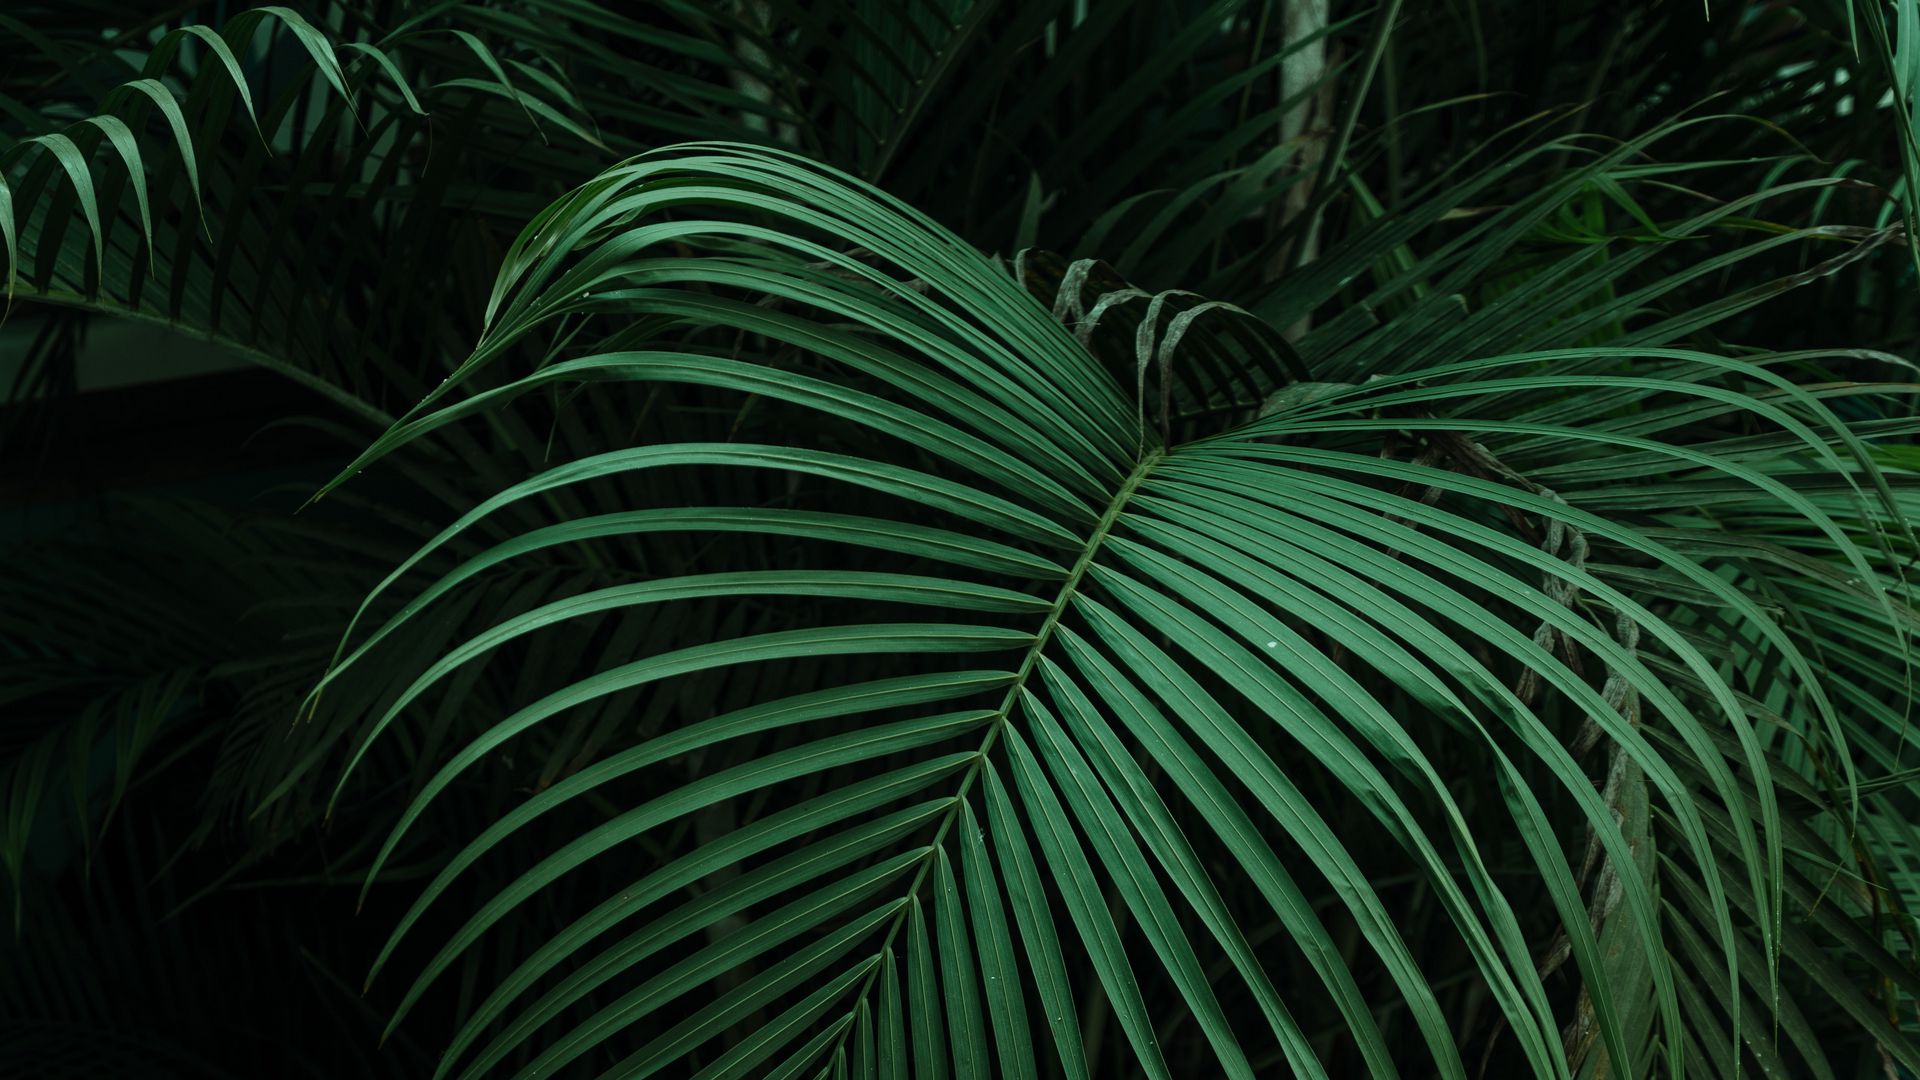 Download wallpaper 1920x1080 palm, leaves, green, dark full hd, hdtv, fhd,  1080p hd background